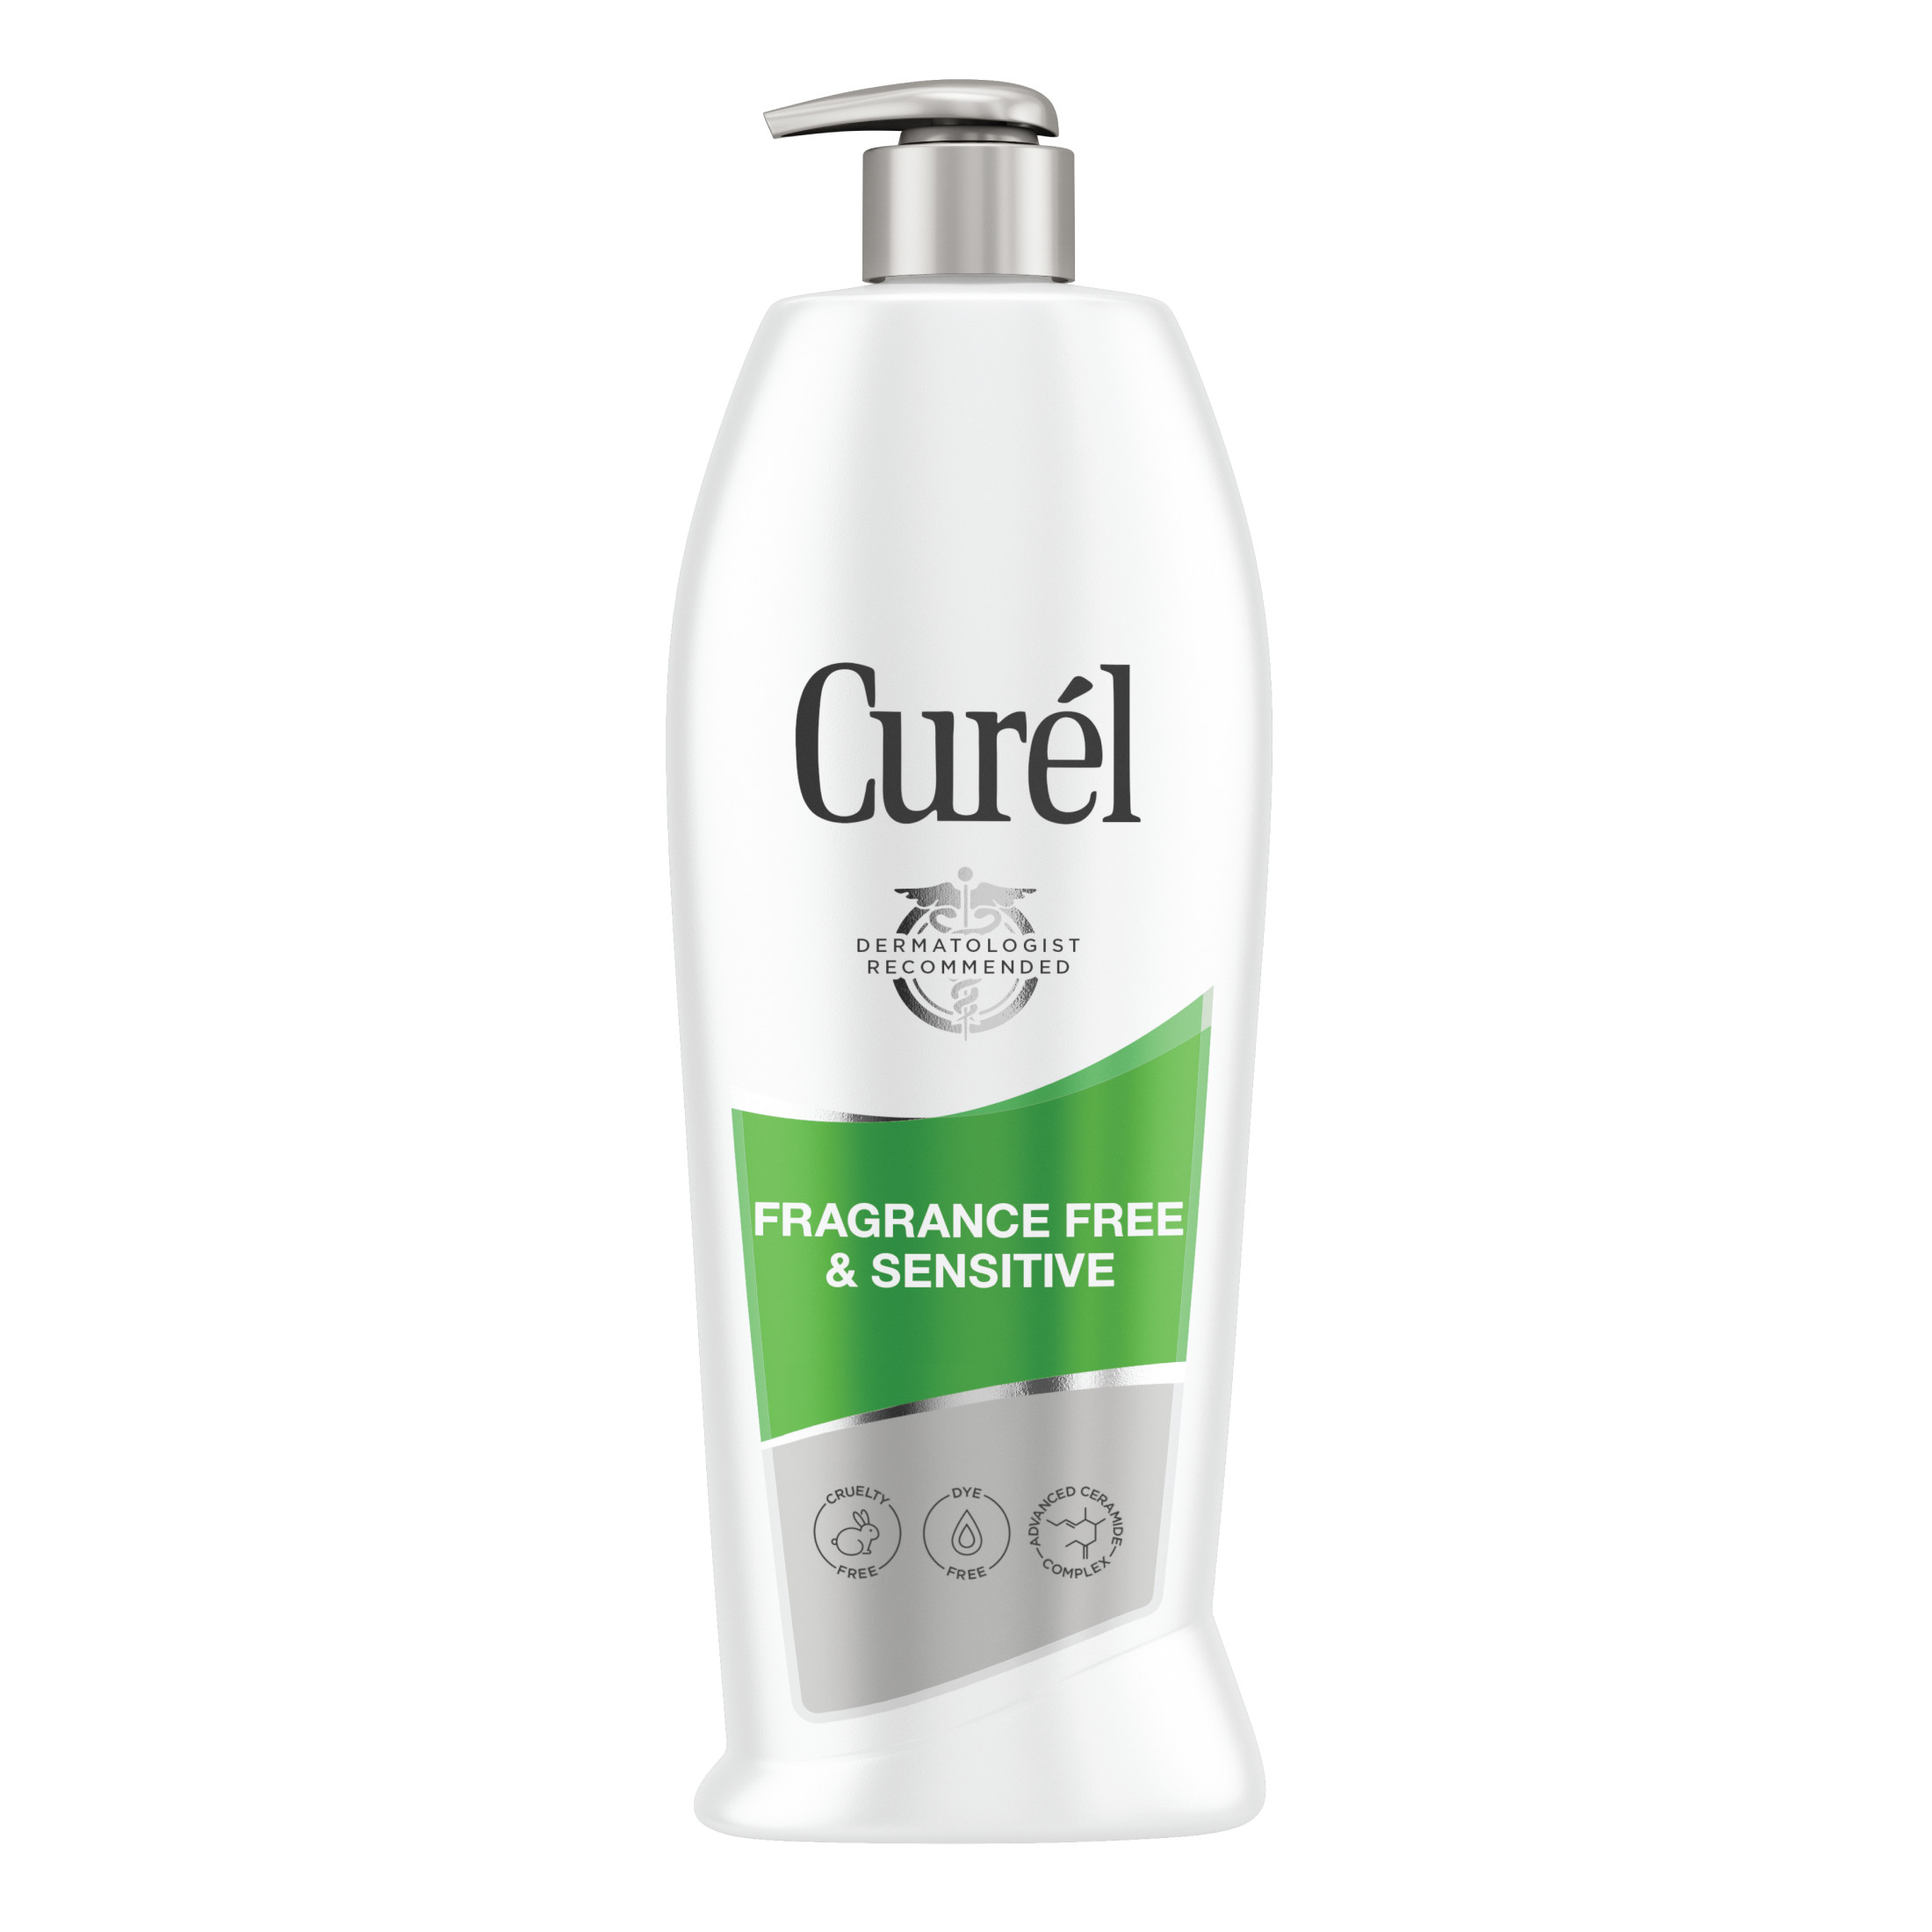 Curel Fragrance Free & Sensitive Lotion, Sensitive Skin Lotion for Dry Skin, Dermatologist Recommended, 20 Oz - image 1 of 9